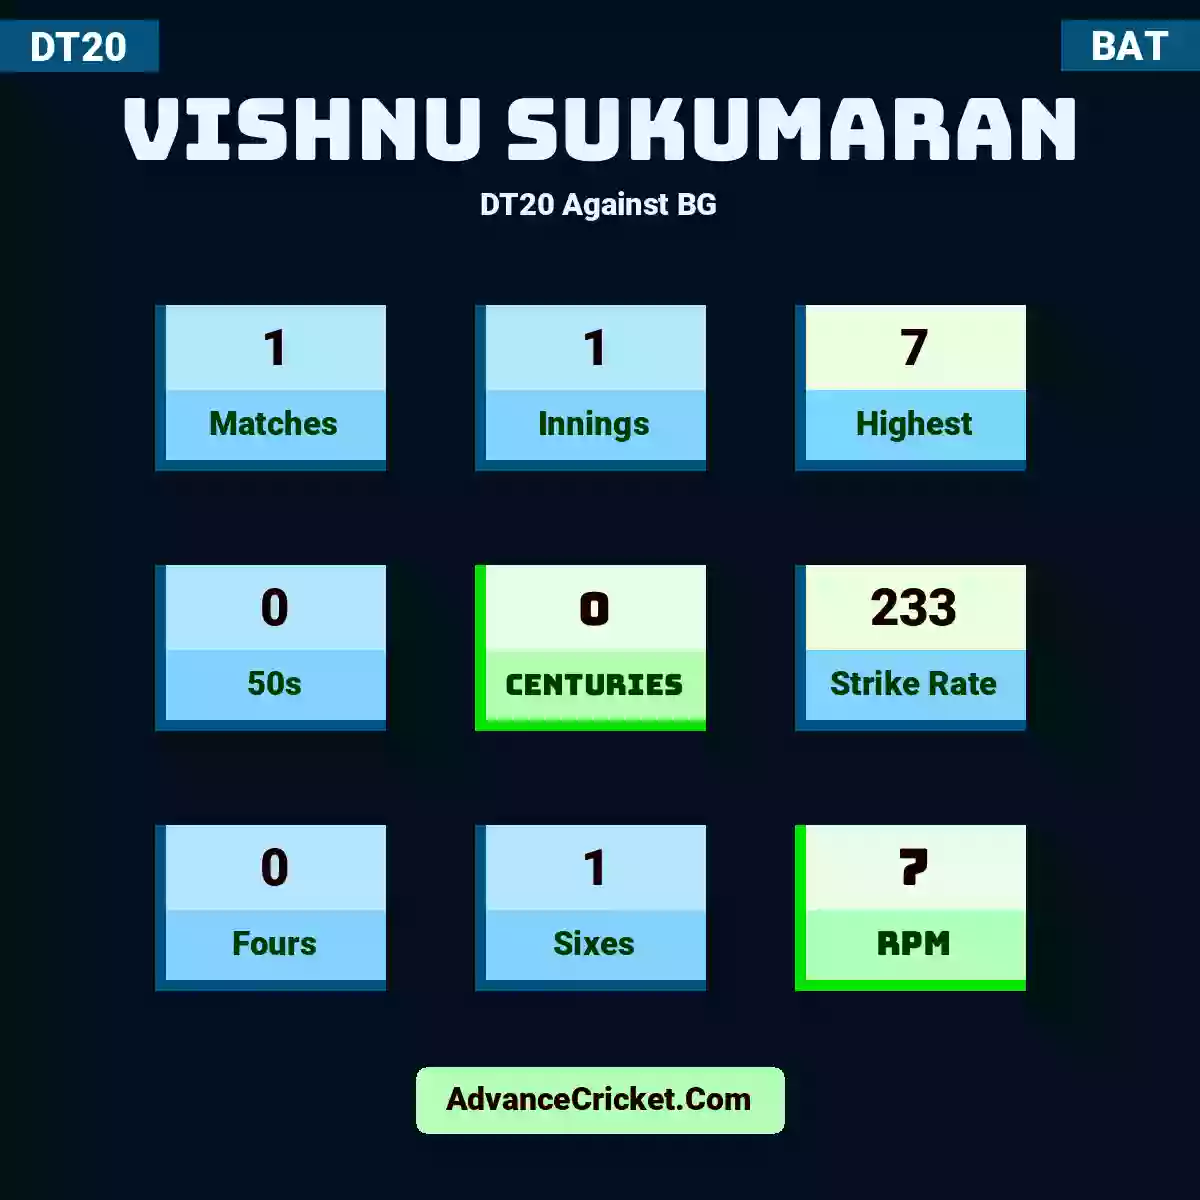 Vishnu Sukumaran DT20  Against BG, Vishnu Sukumaran played 1 matches, scored 7 runs as highest, 0 half-centuries, and 0 centuries, with a strike rate of 233. V.Sukumaran hit 0 fours and 1 sixes, with an RPM of 7.